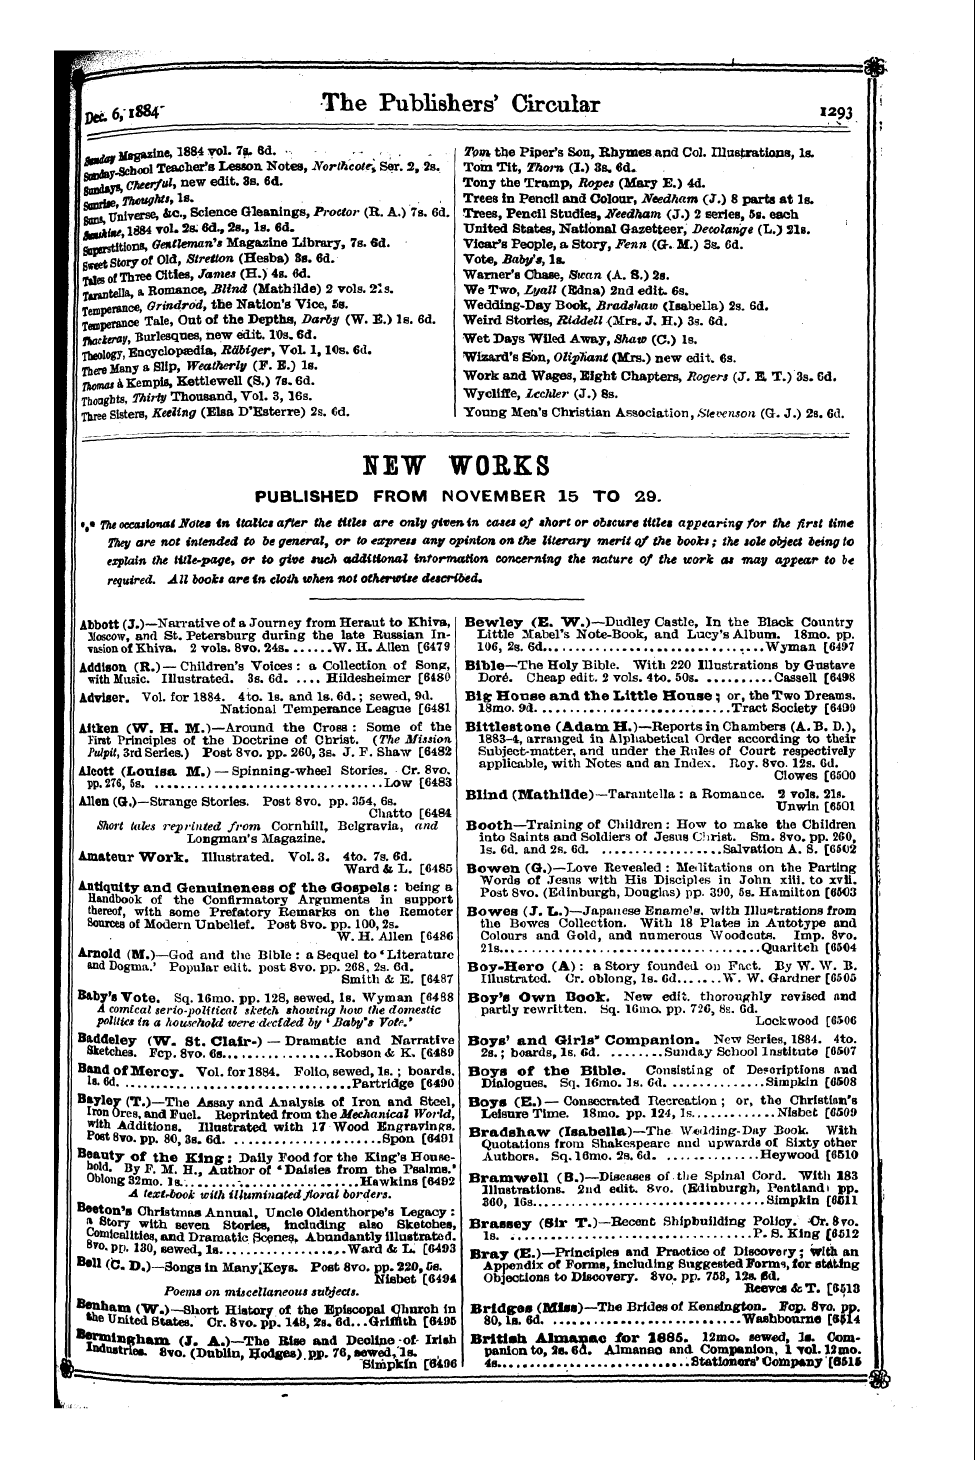 Publishers’ Circular (1880-1890): jS F Y, 1st edition: 53